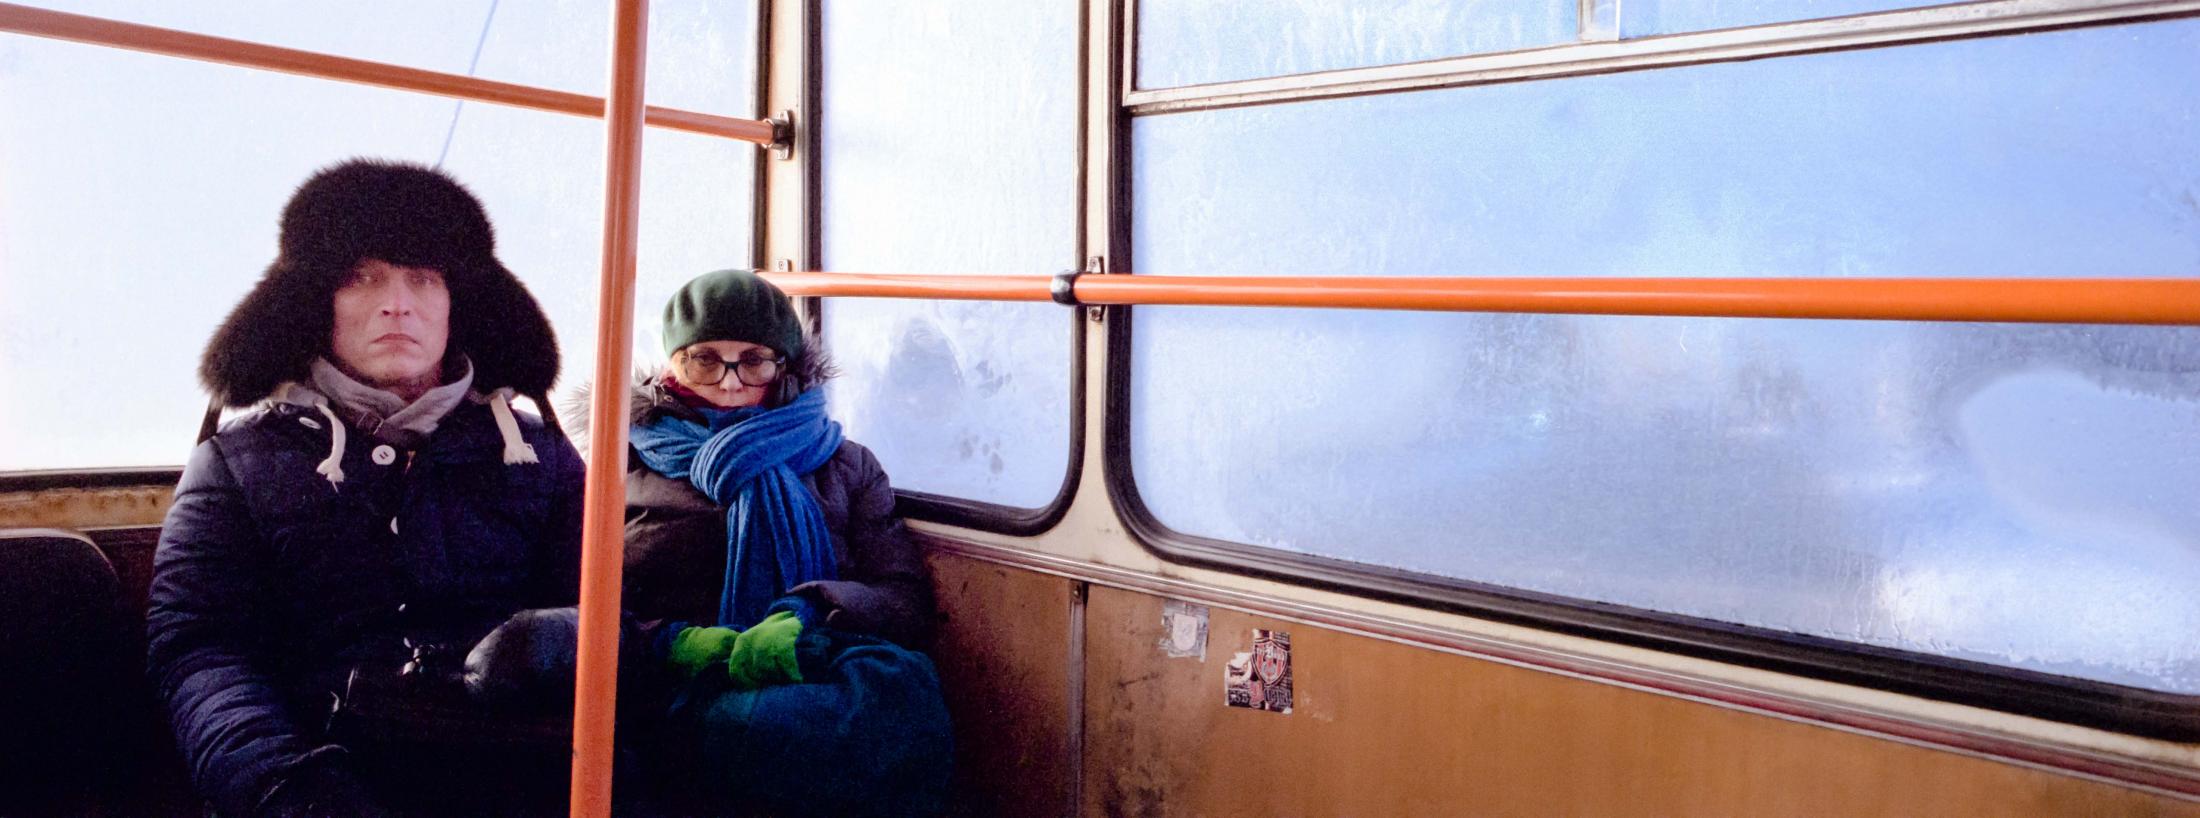 Season For The Brave -  No 12 trolley bus, Vilnius, Lithuania. 2015 